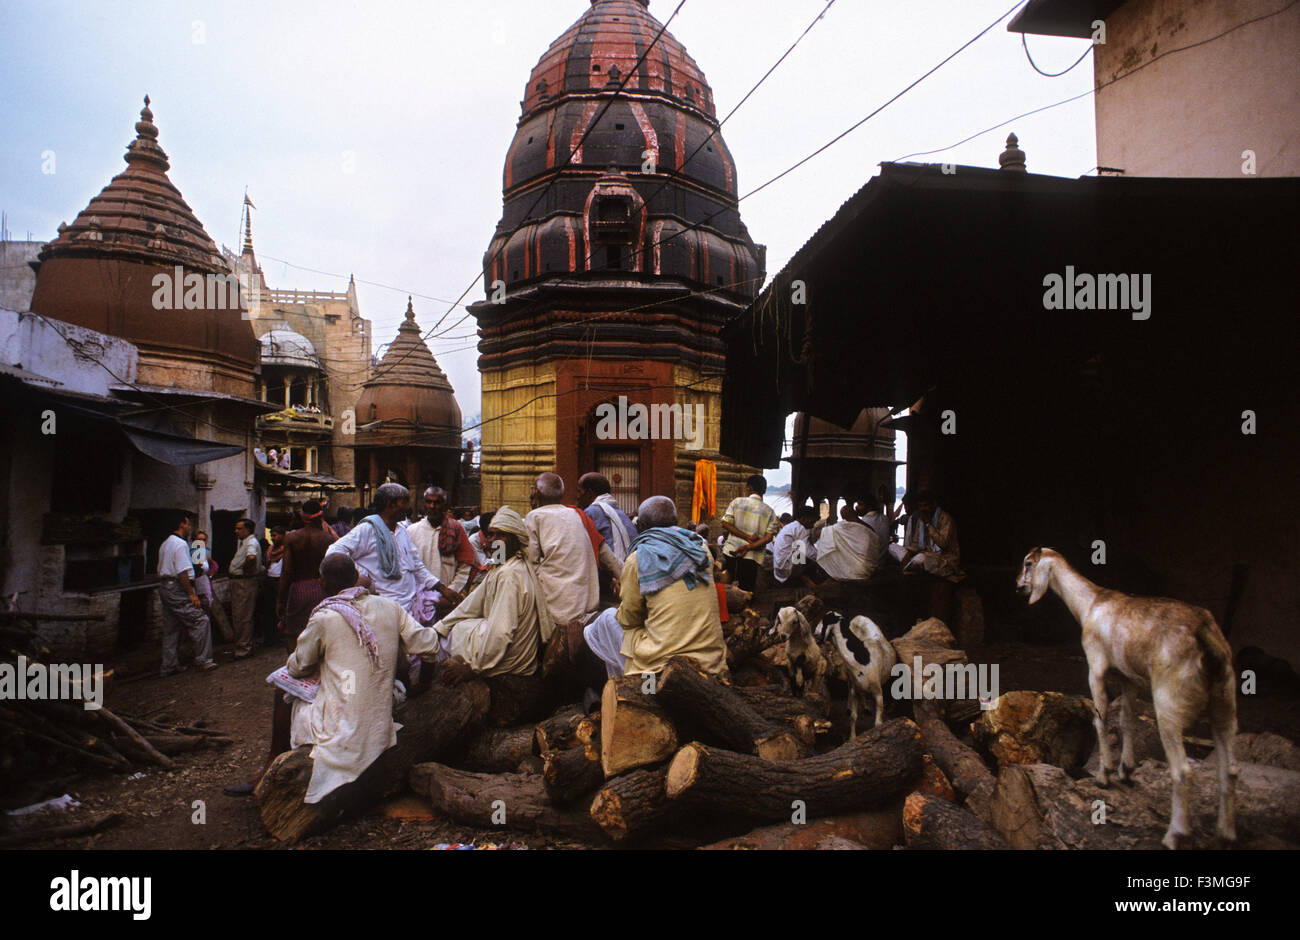 Asia India Uttar Pradesh Varanasi Manikarnika Ghat utilizado para ceremonias de cremación hindú. Varanasi, Uttar Pradesh, India. Manikarn Foto de stock